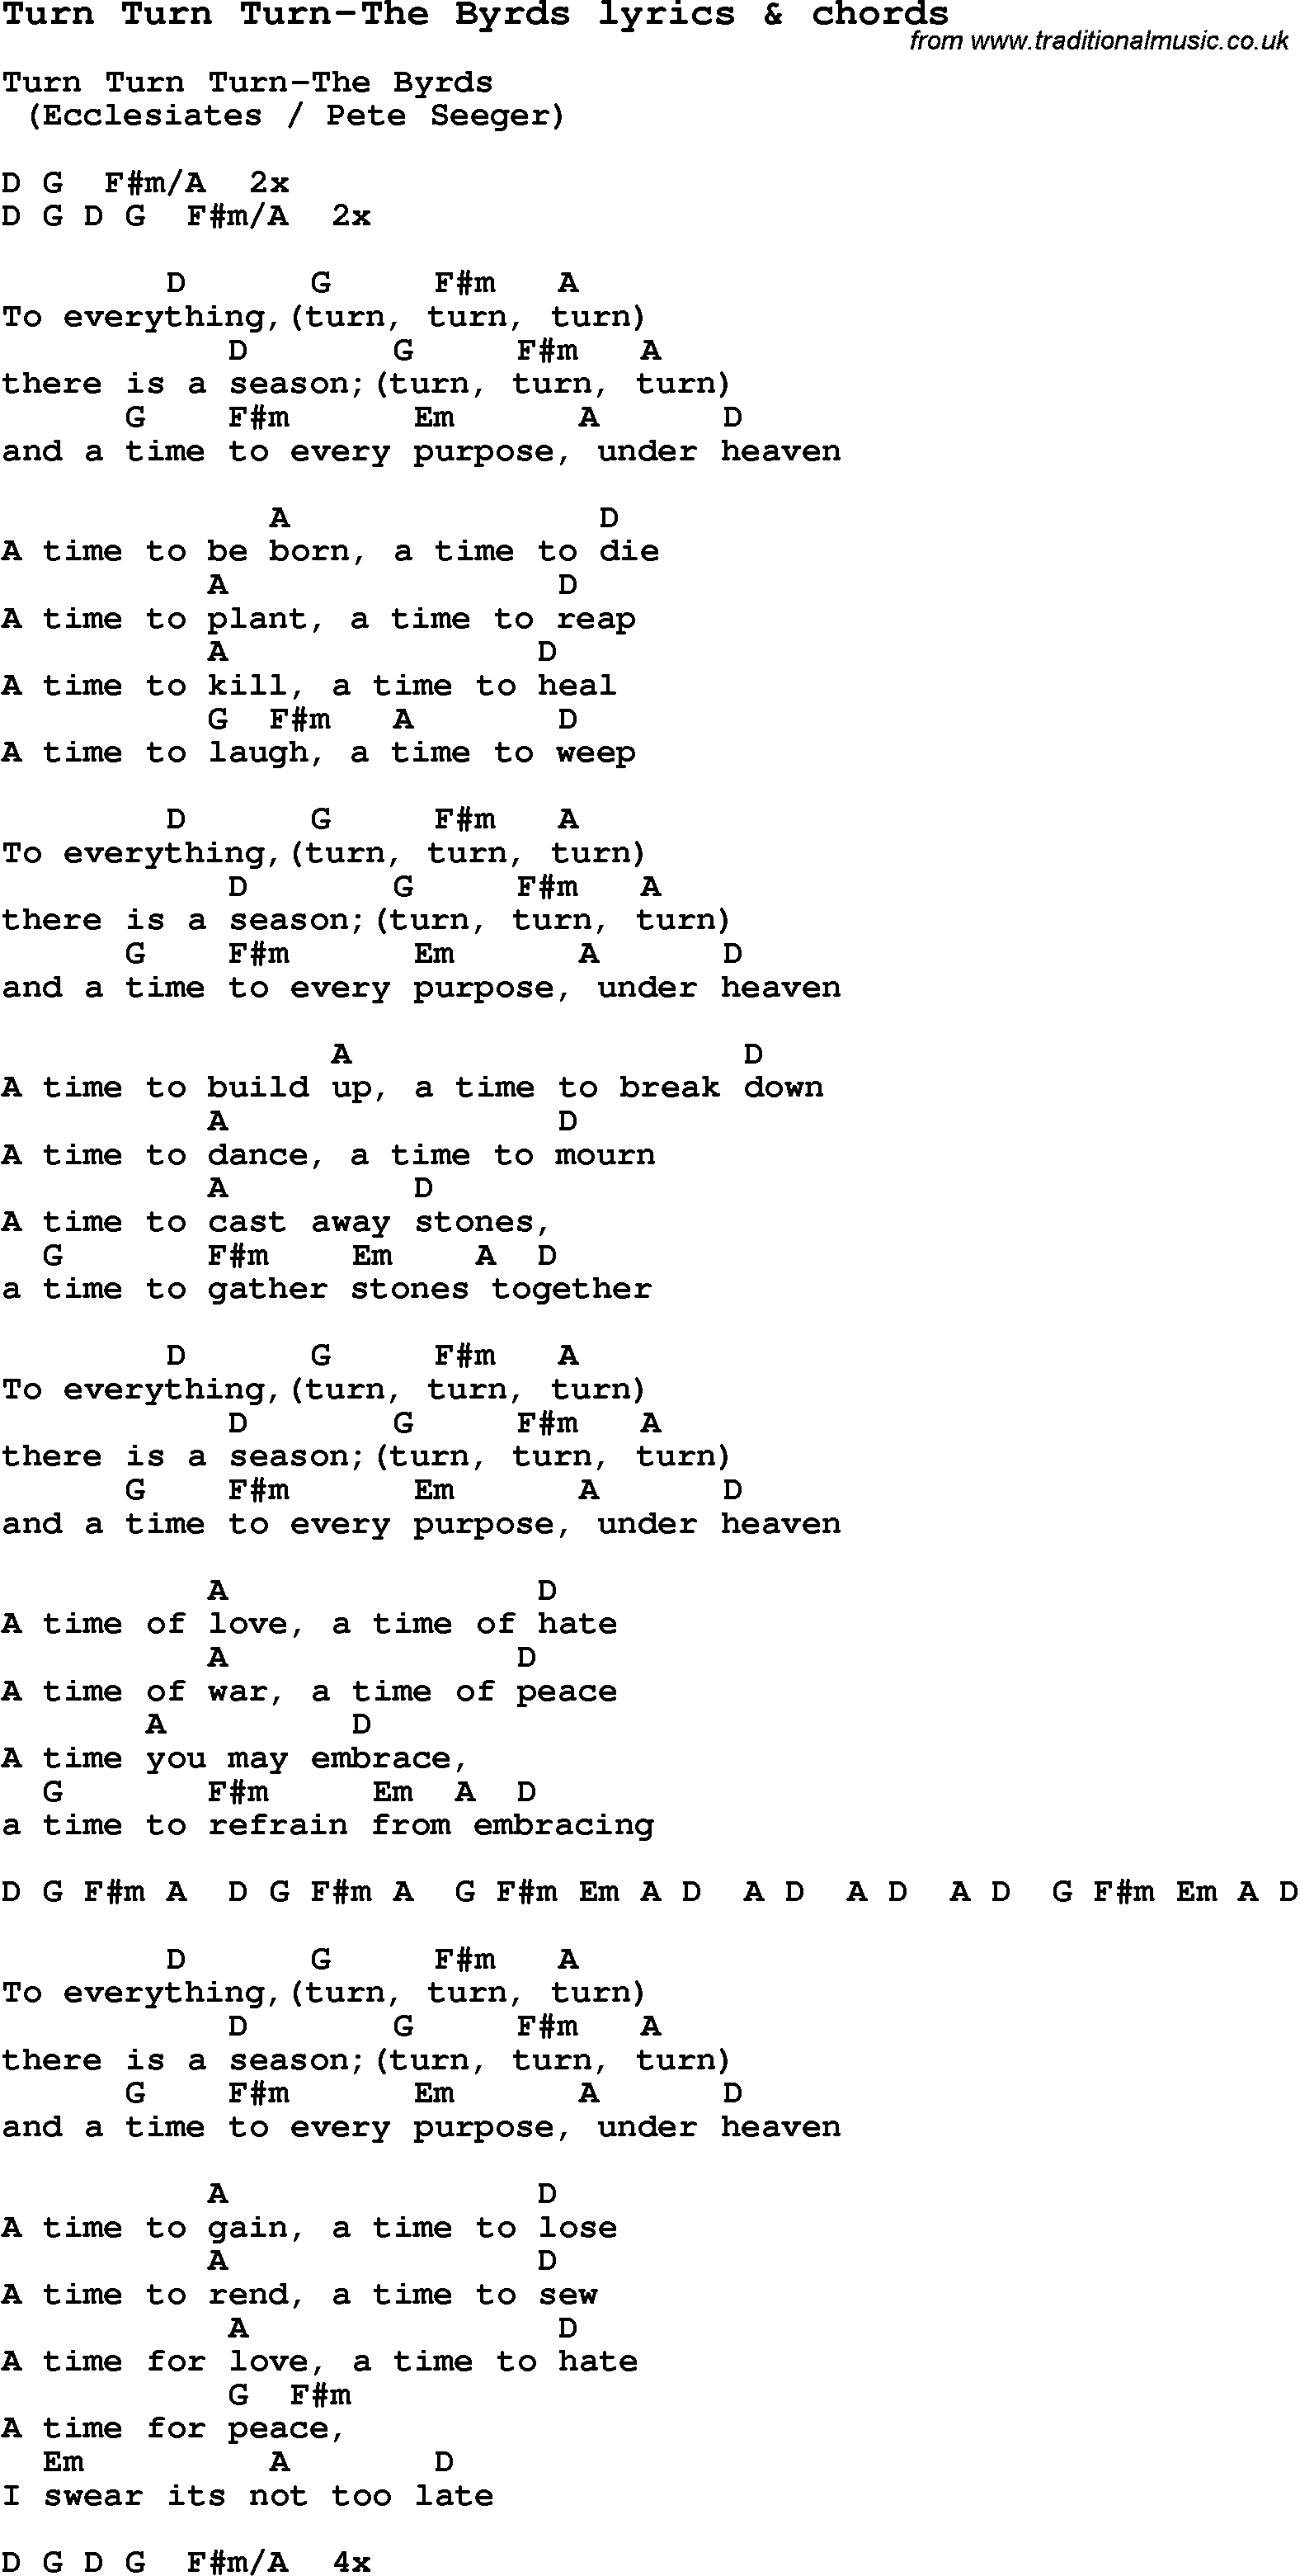 Love Song Lyrics for: Turn Turn Turn-The Byrds with chords for Ukulele, Guitar Banjo etc.